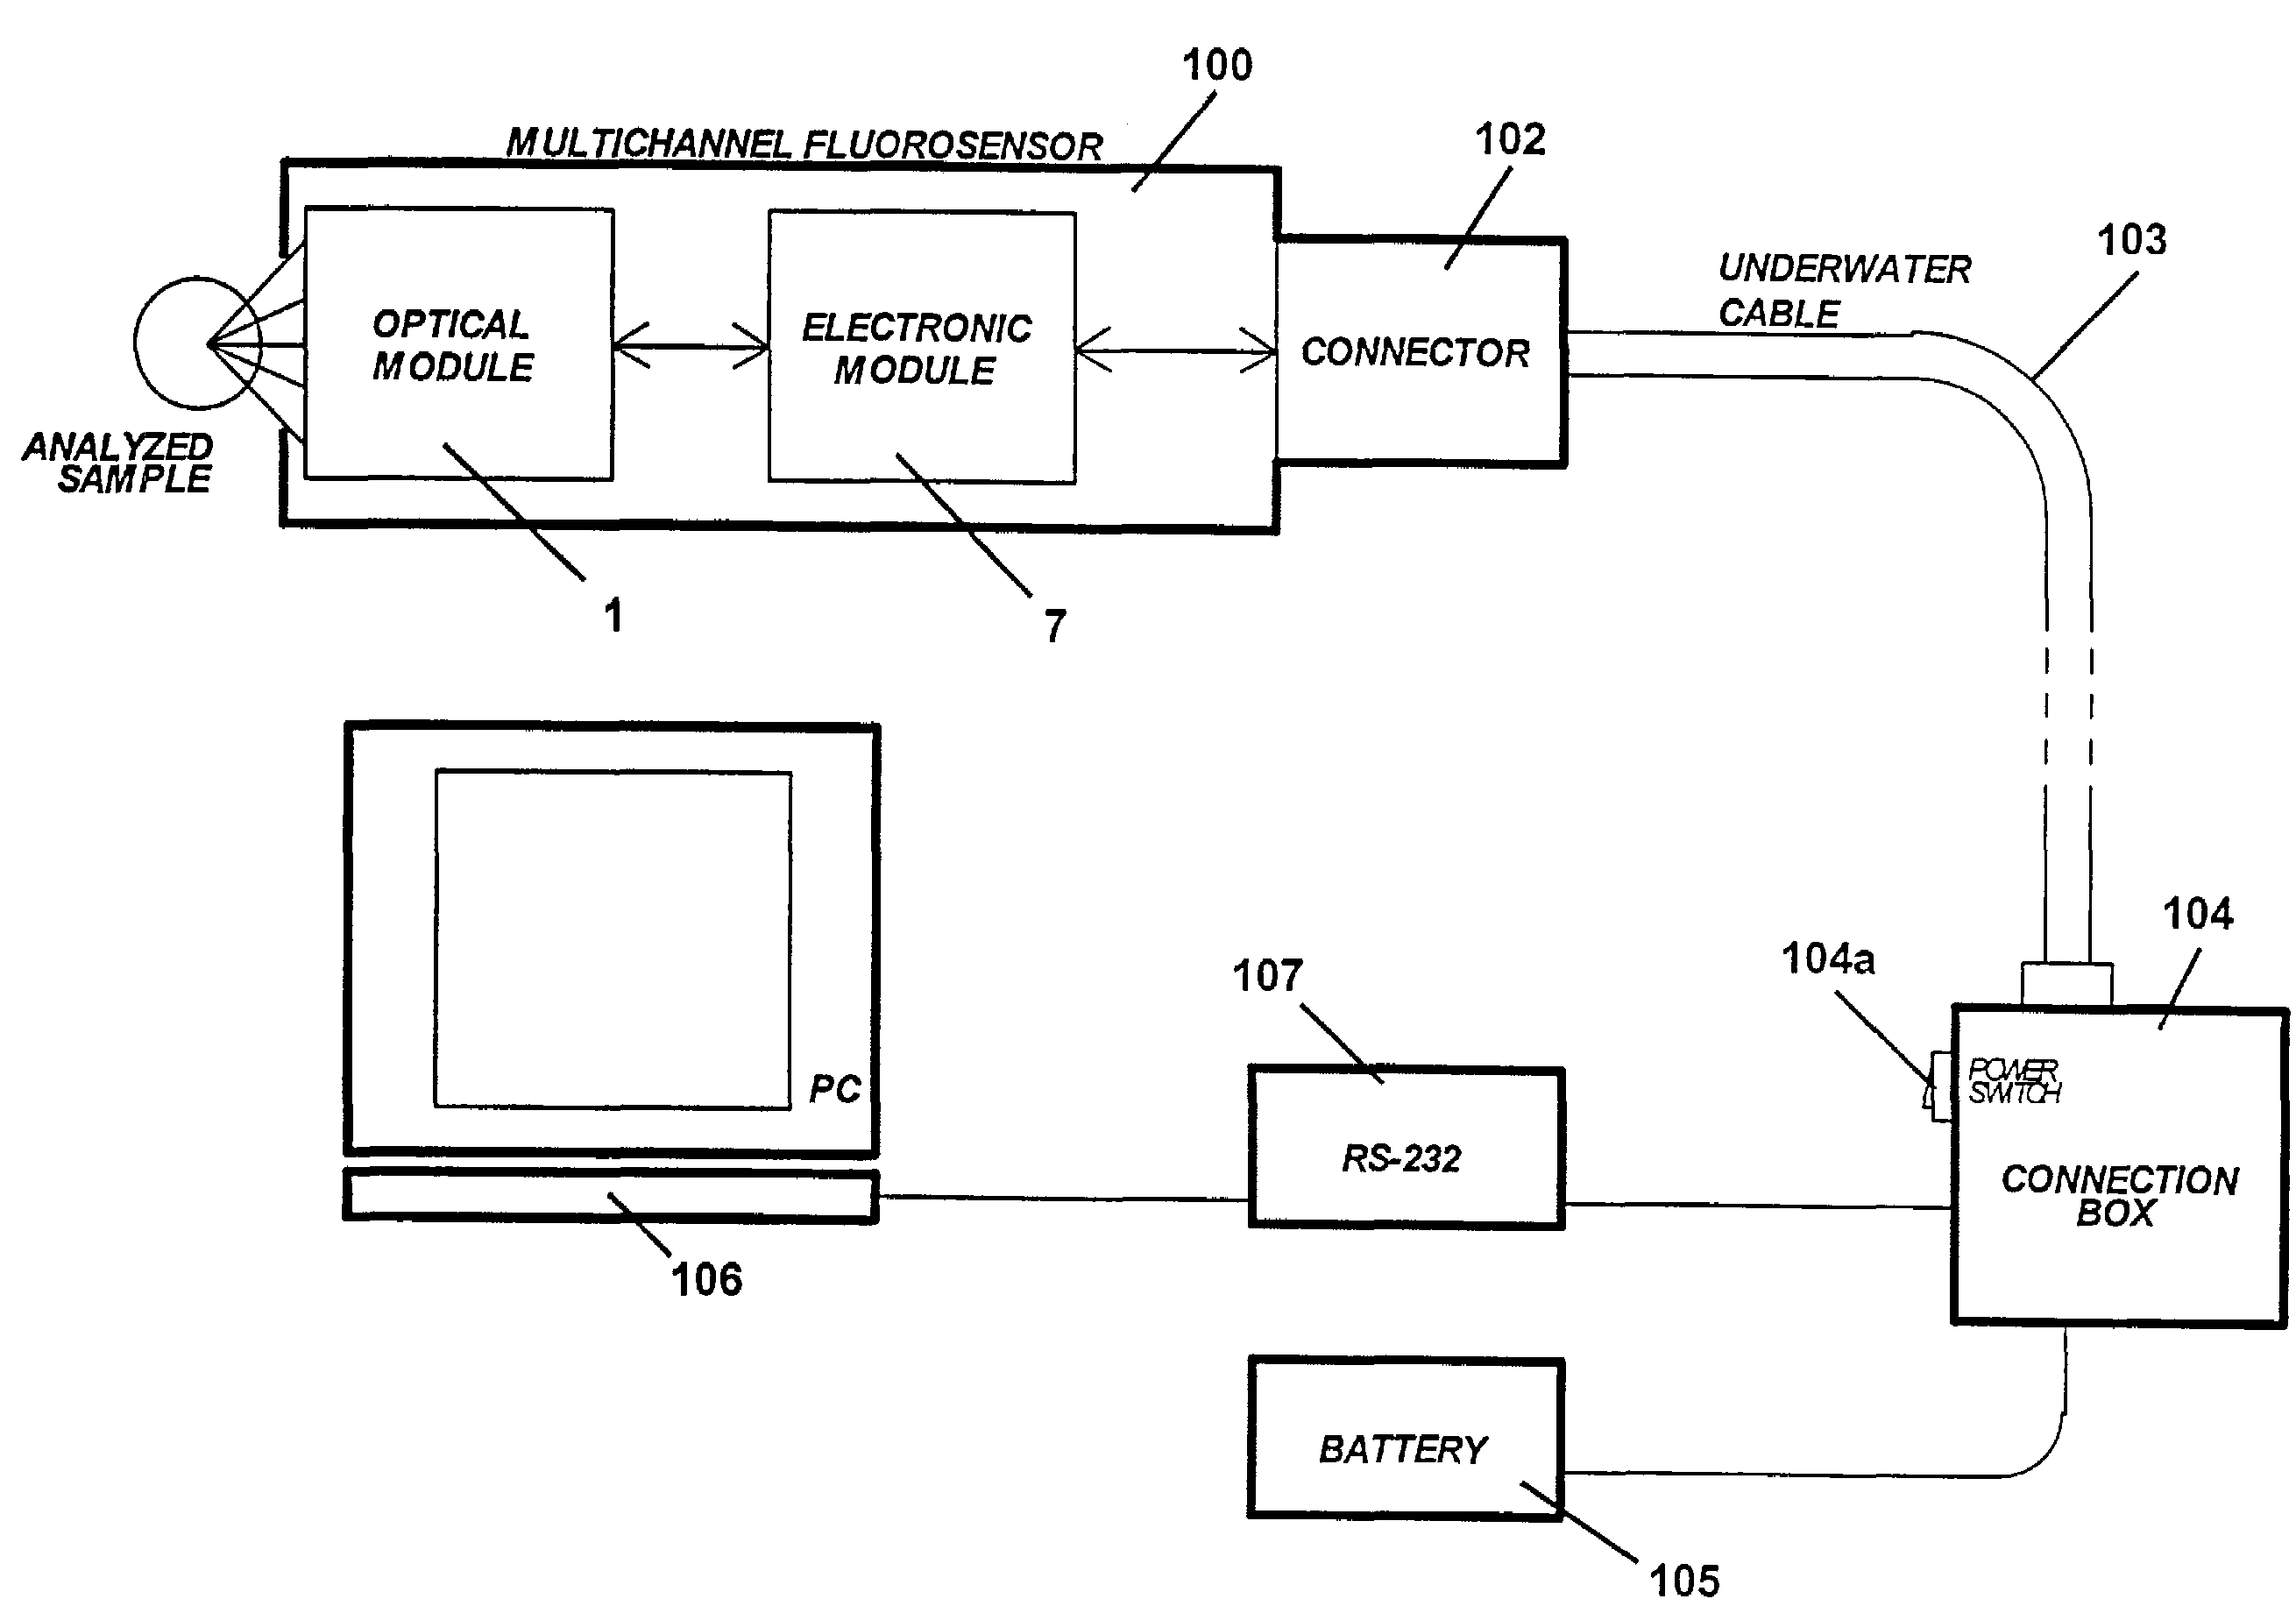 Multichannel fluorosensor